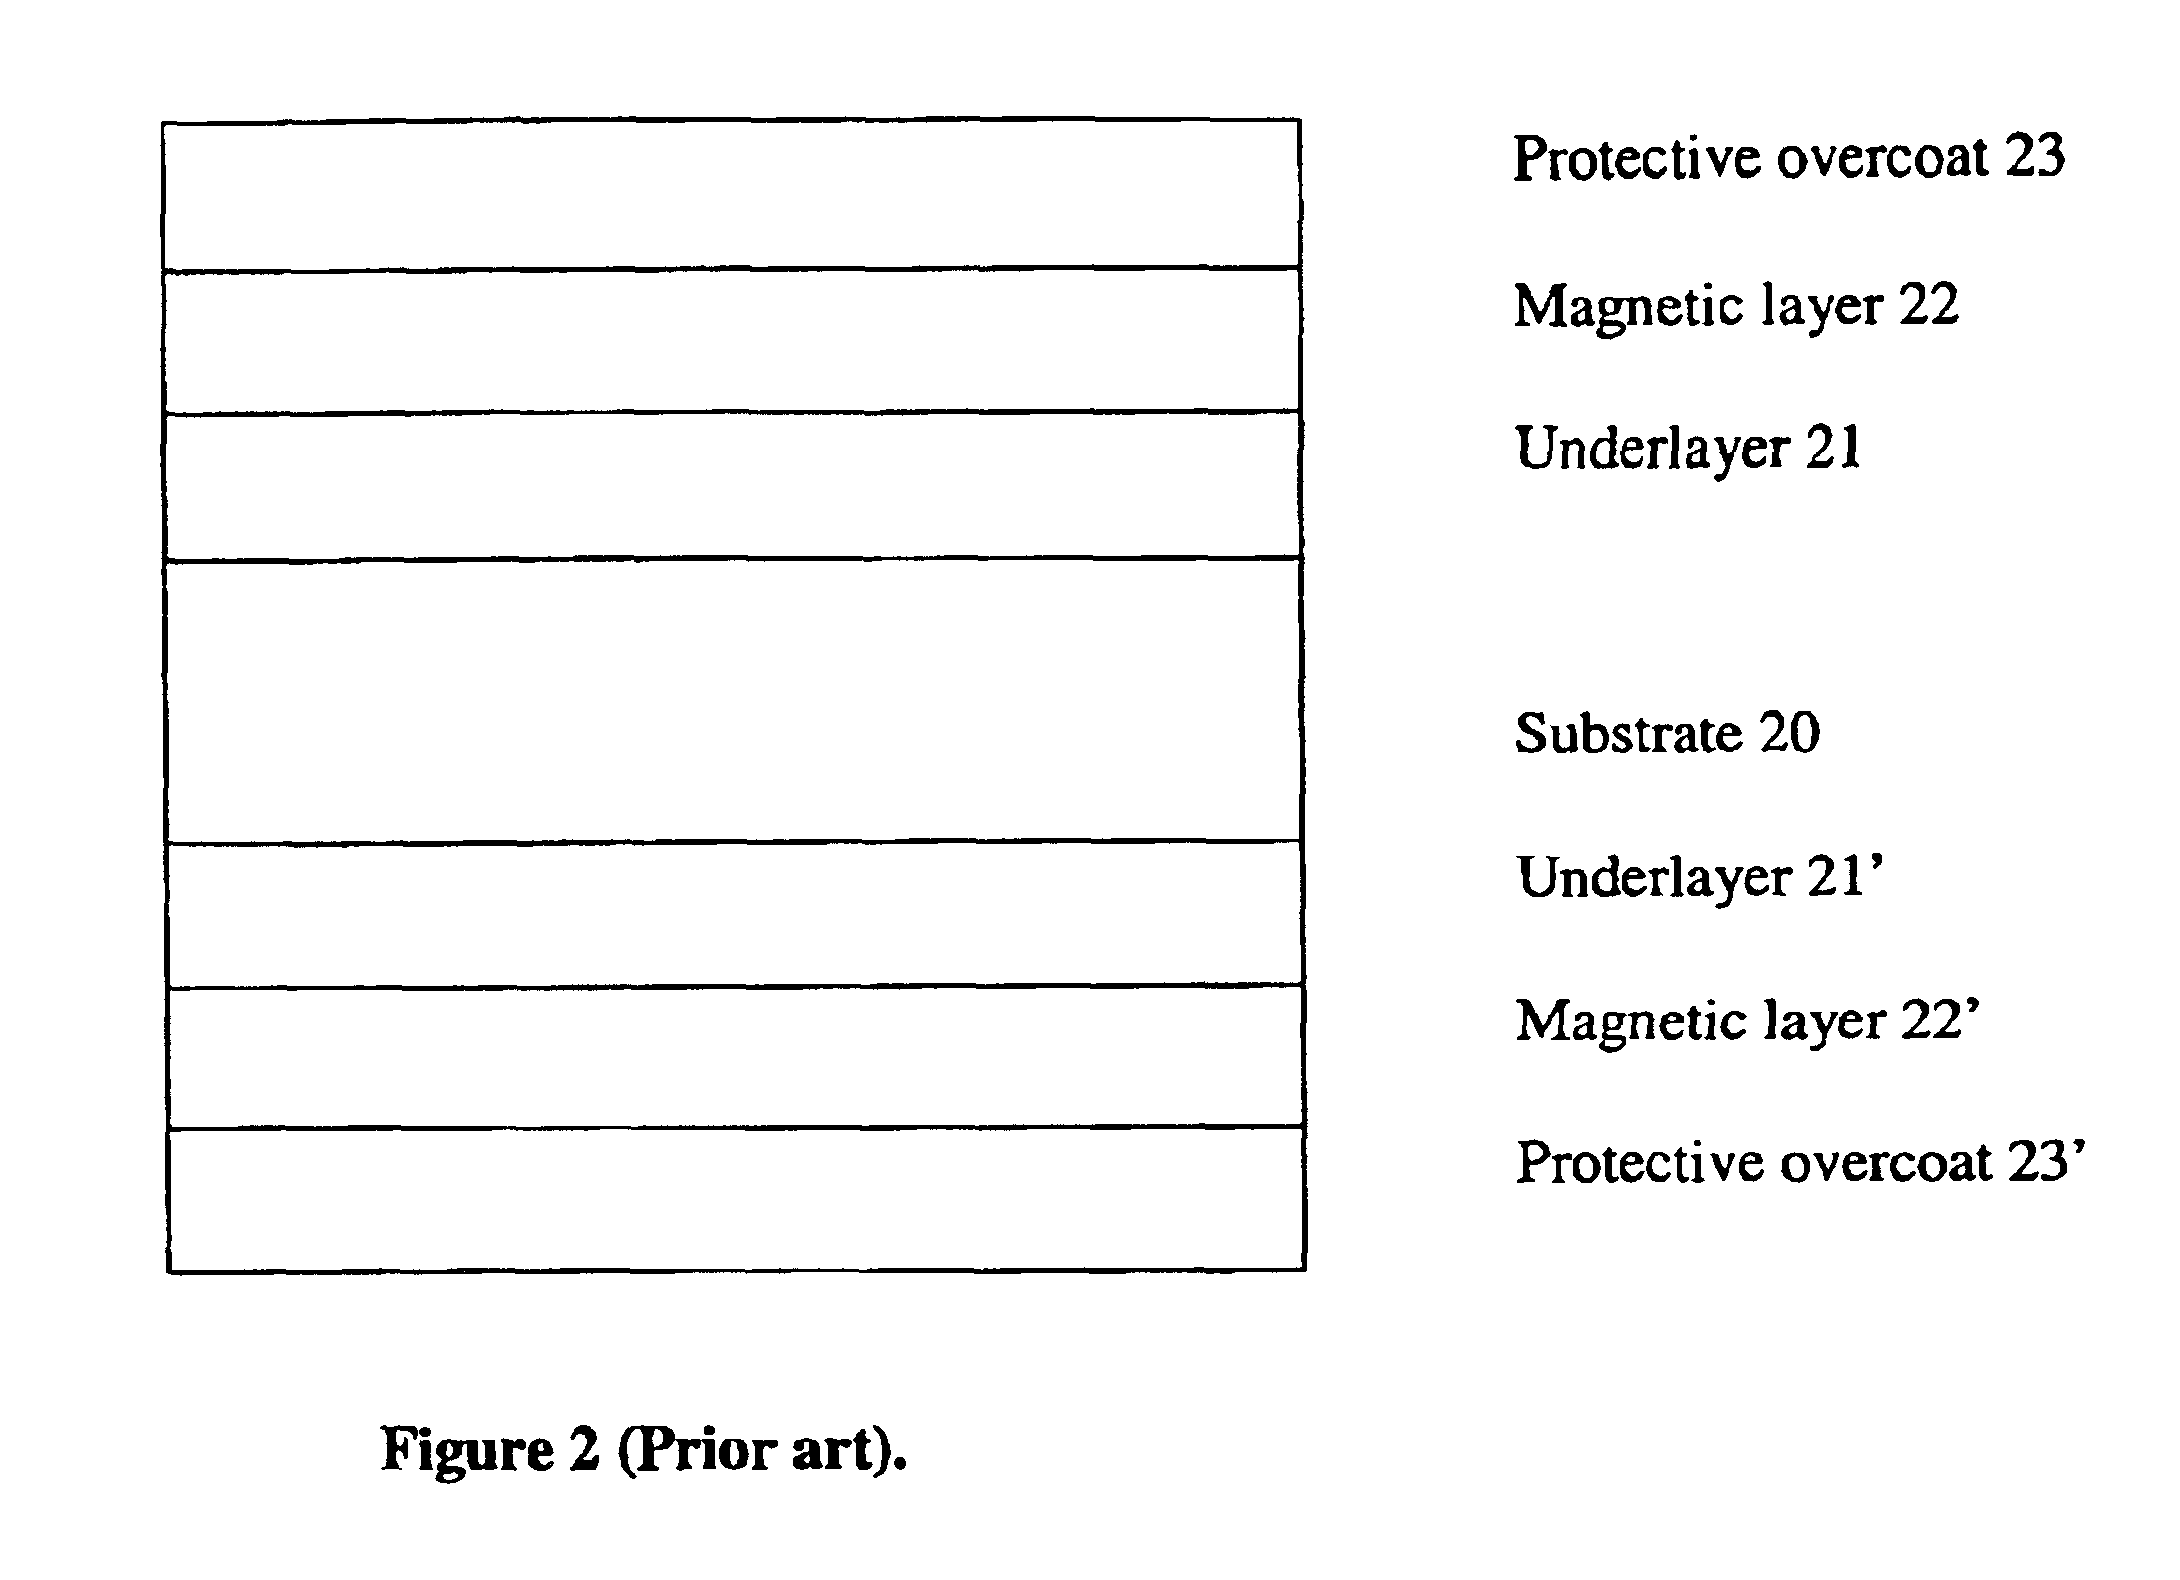 Tilted recording medium design with (101-2) orientation